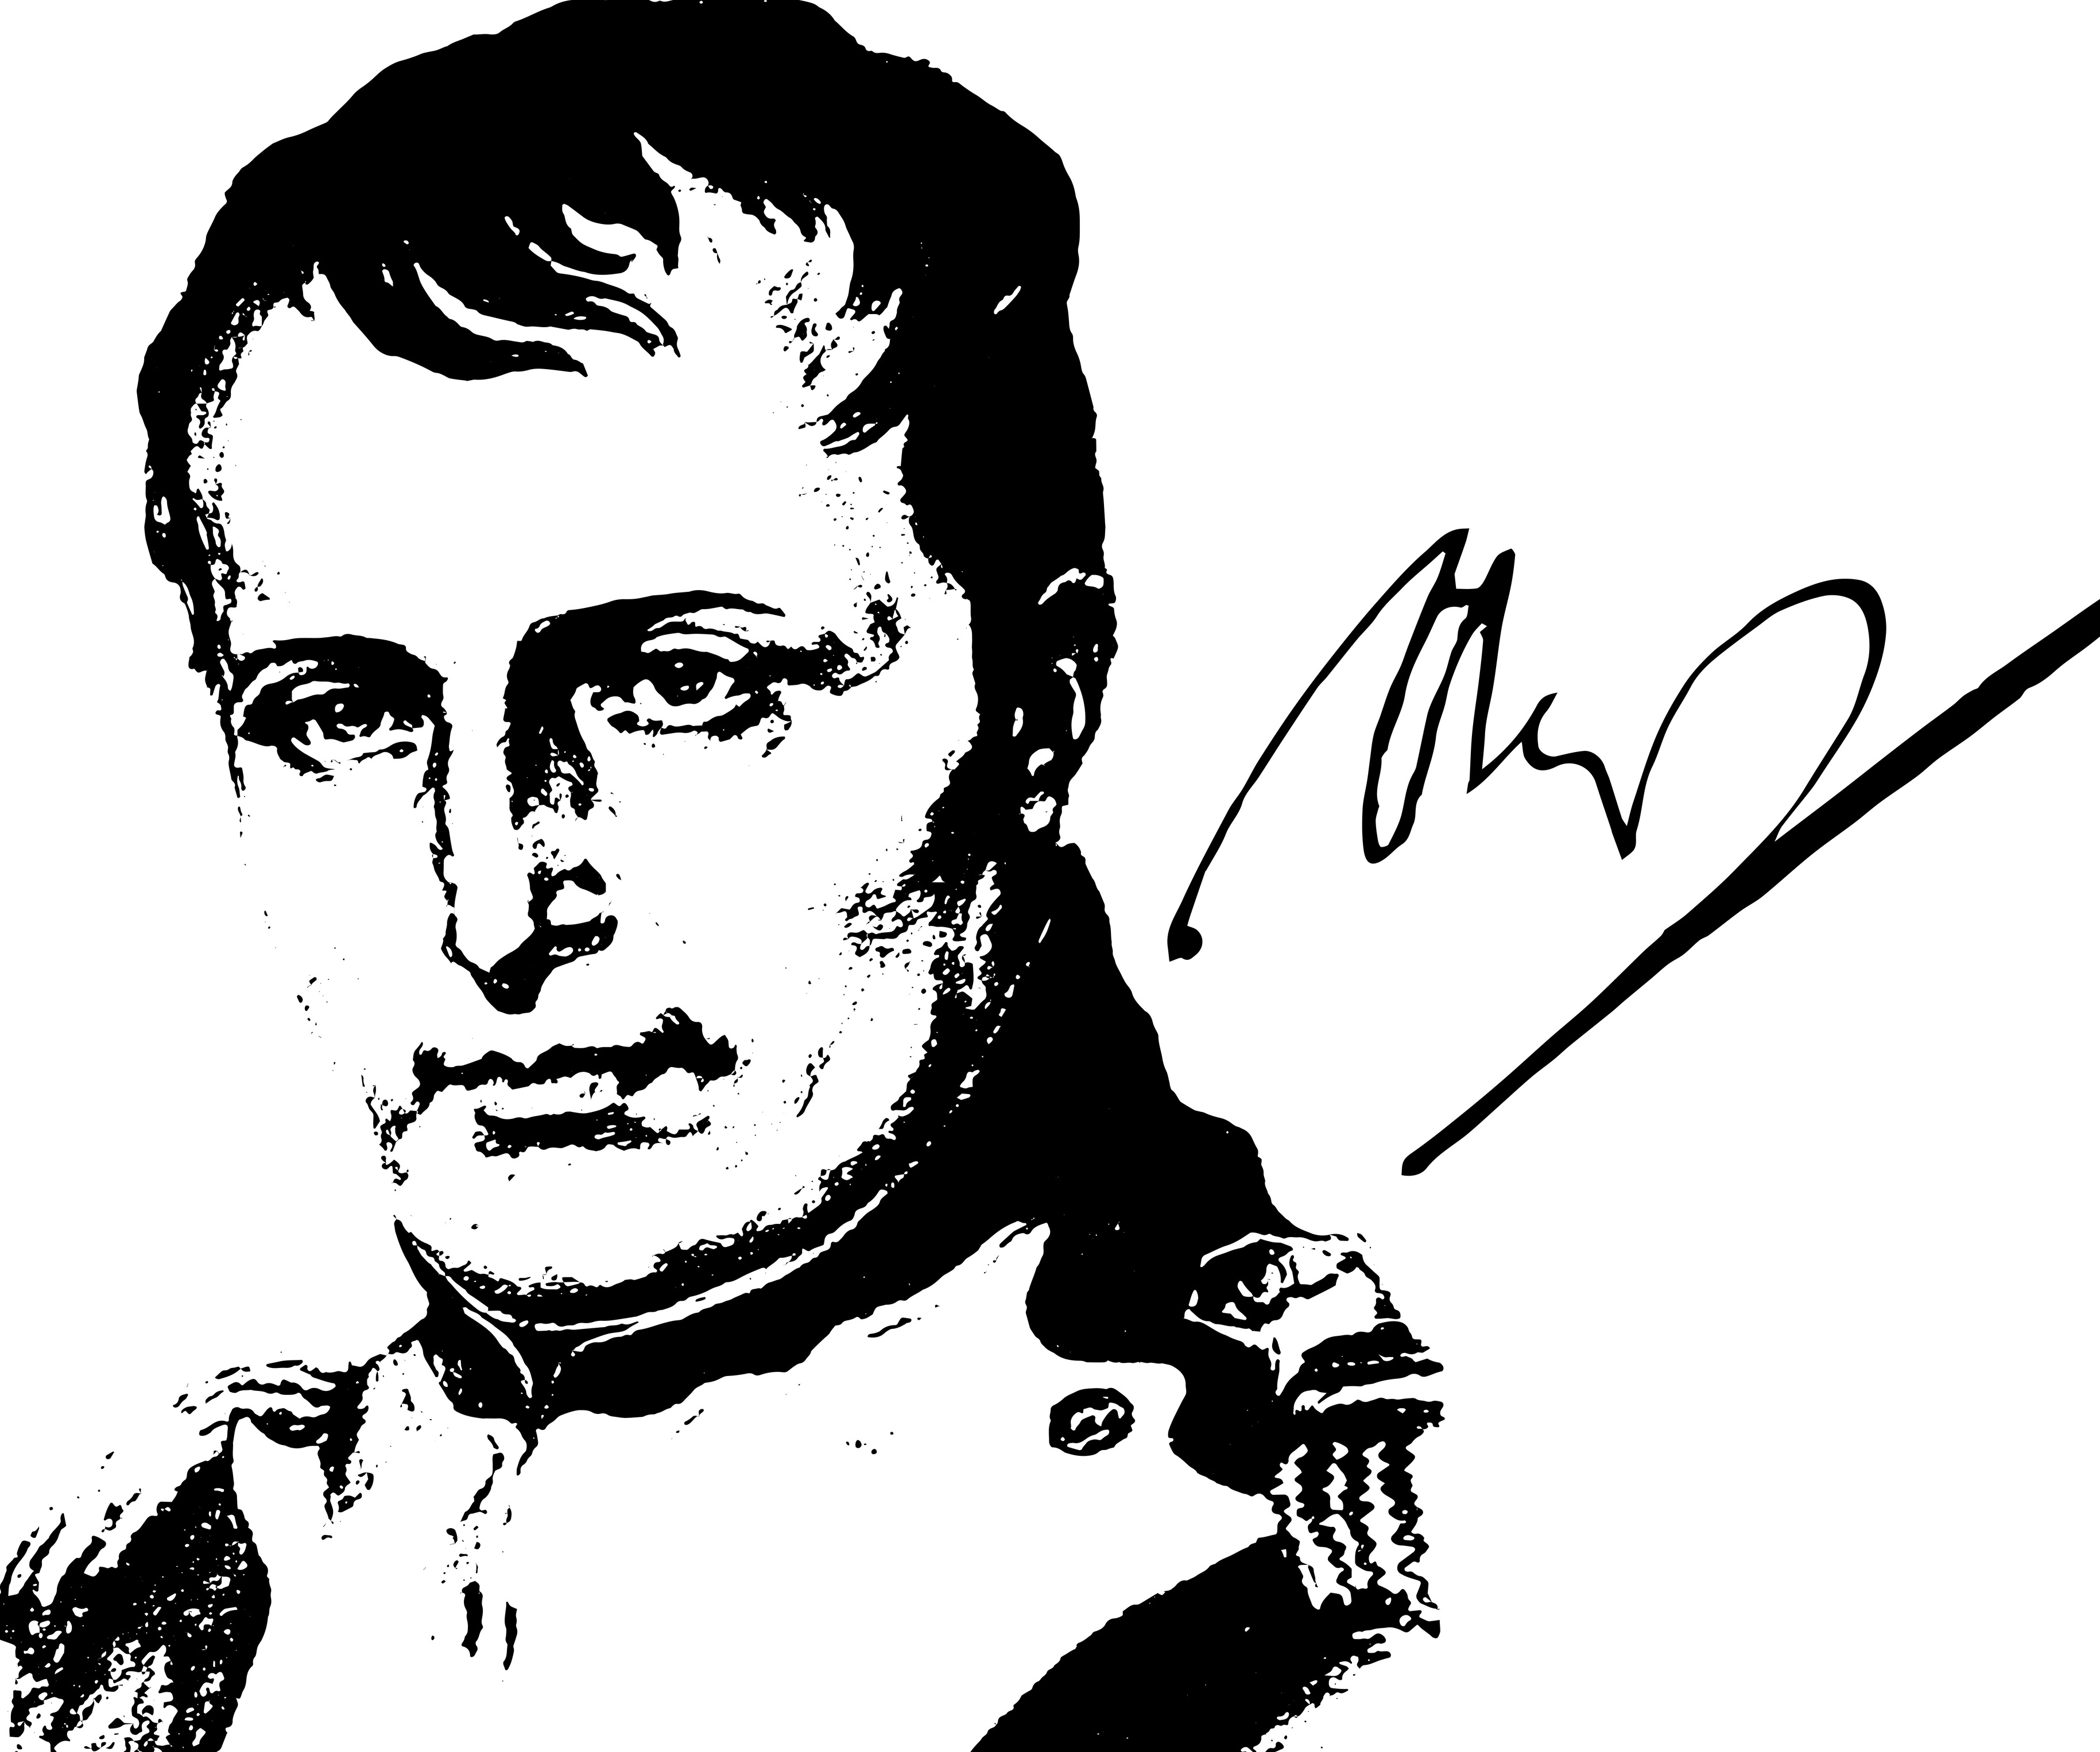 Napoleon Bonaparte with his signature